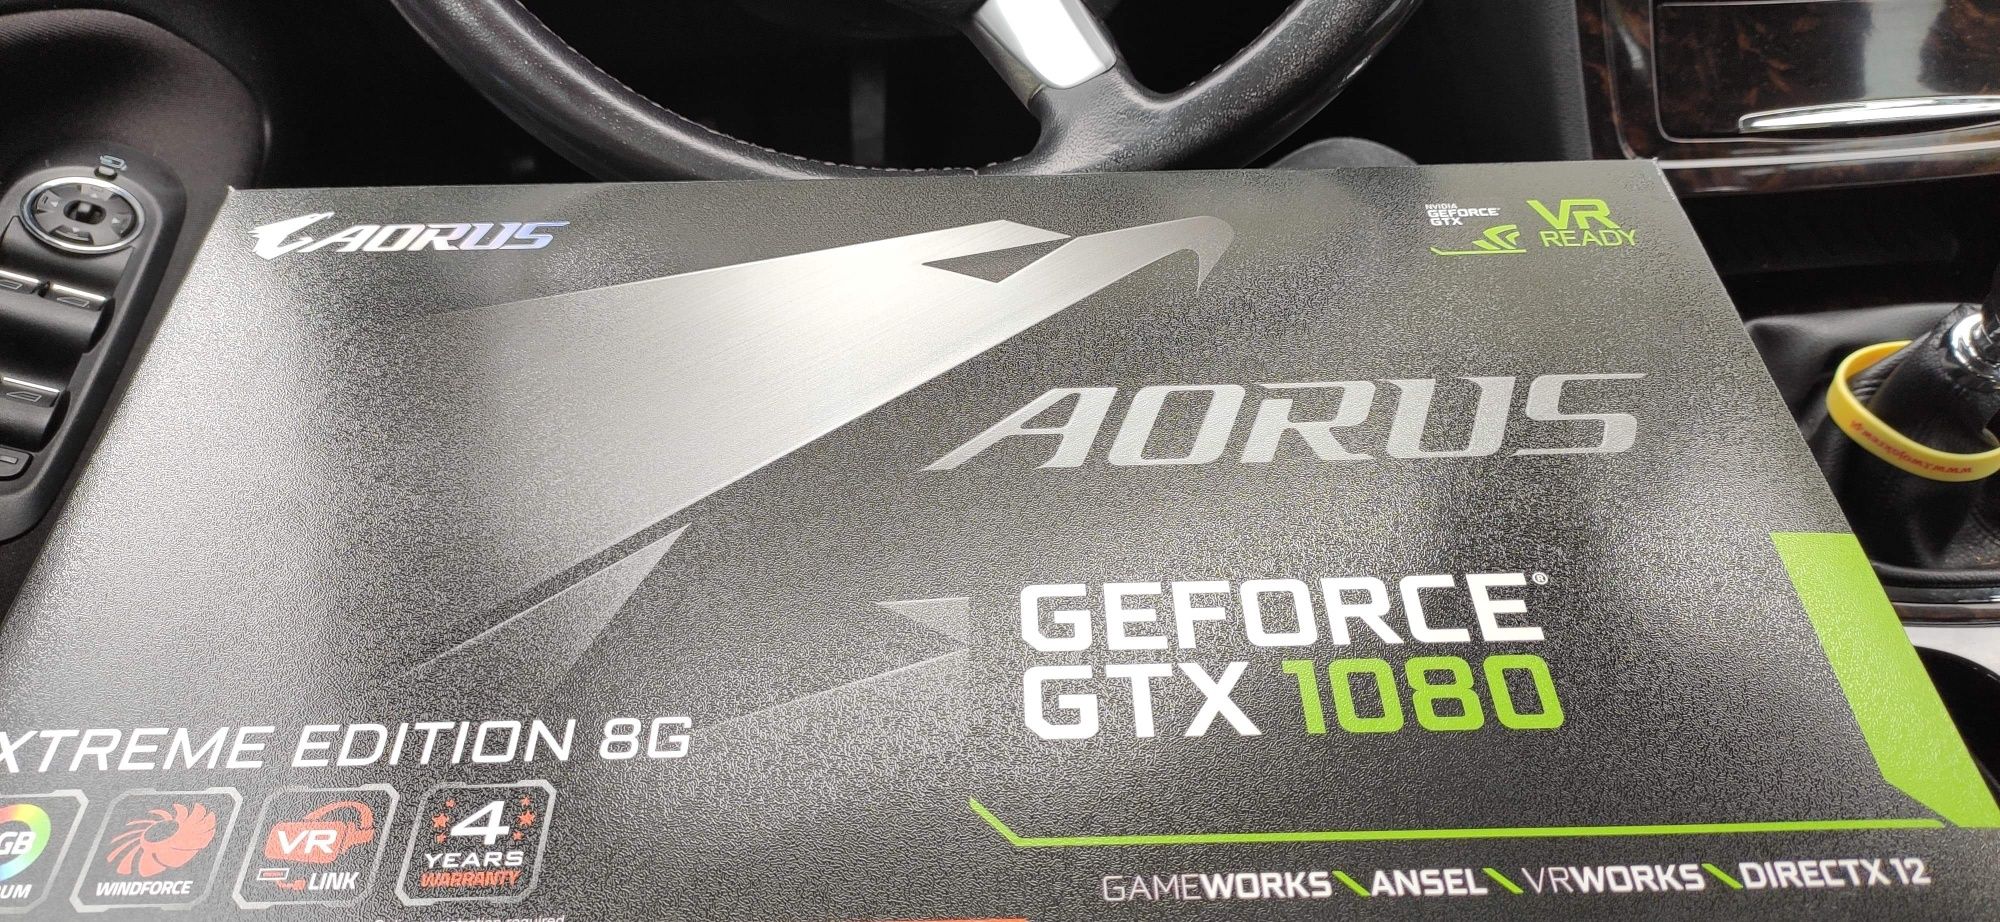 GTX 1080 Aorus Extreme  Gaming Oc